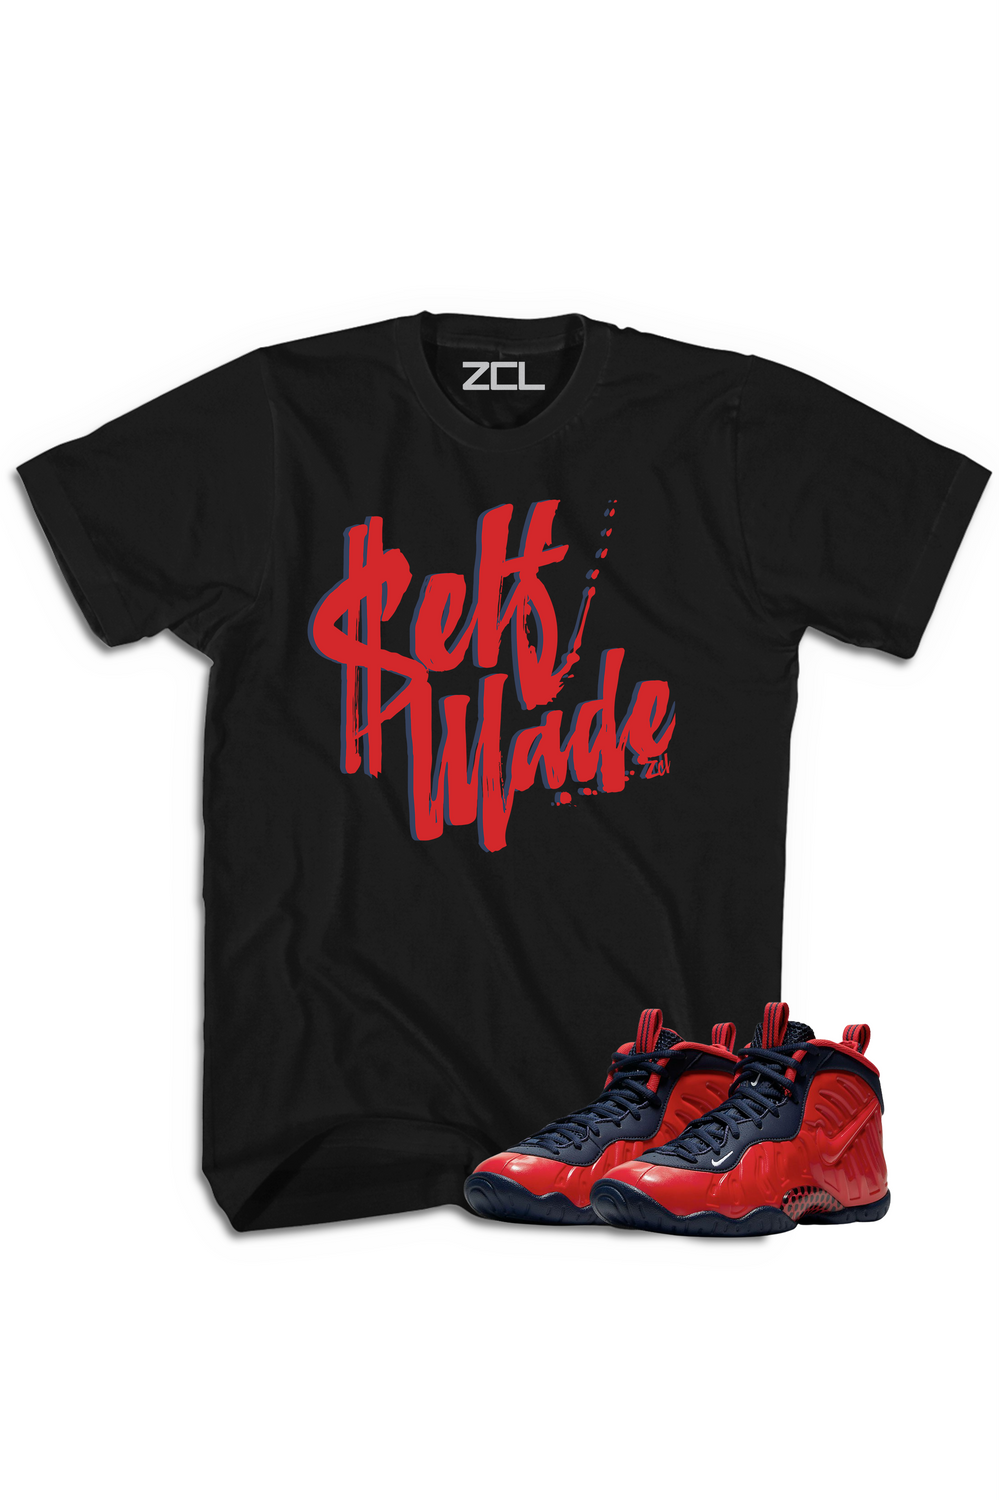 Nike Air Foamposite Pro USA "Self Made" Tee Crimson - Zamage